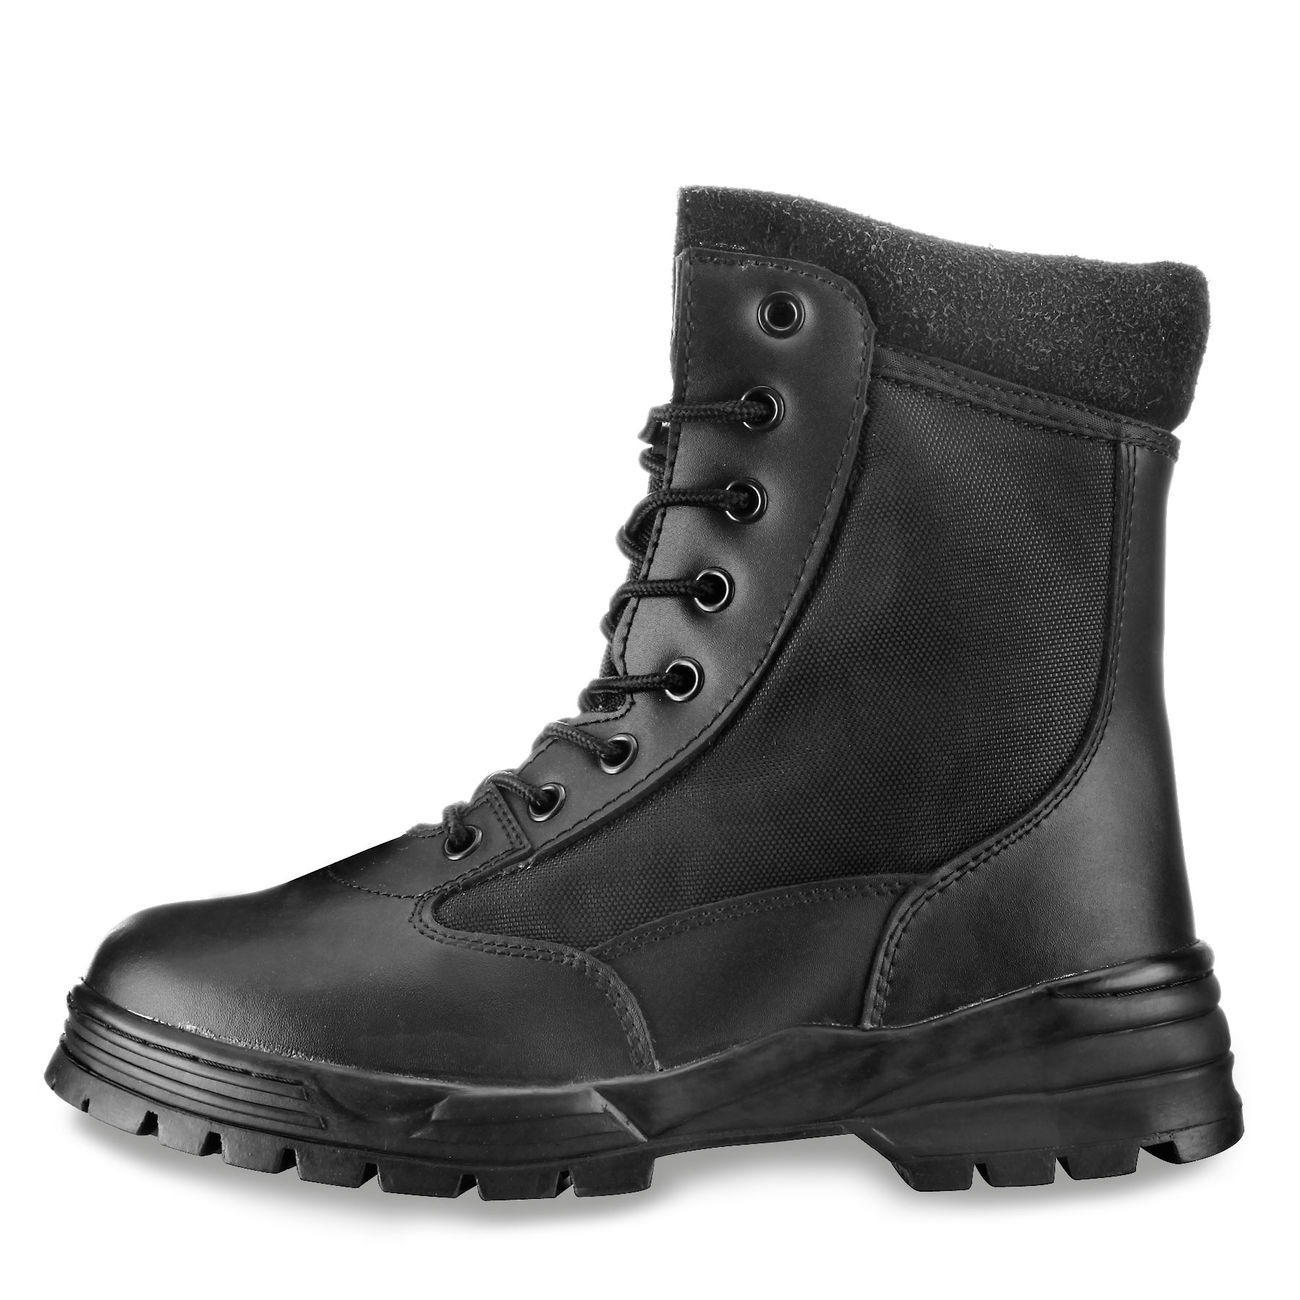 McAllister Boots PatriotStyle, m. Zipper, schwarz